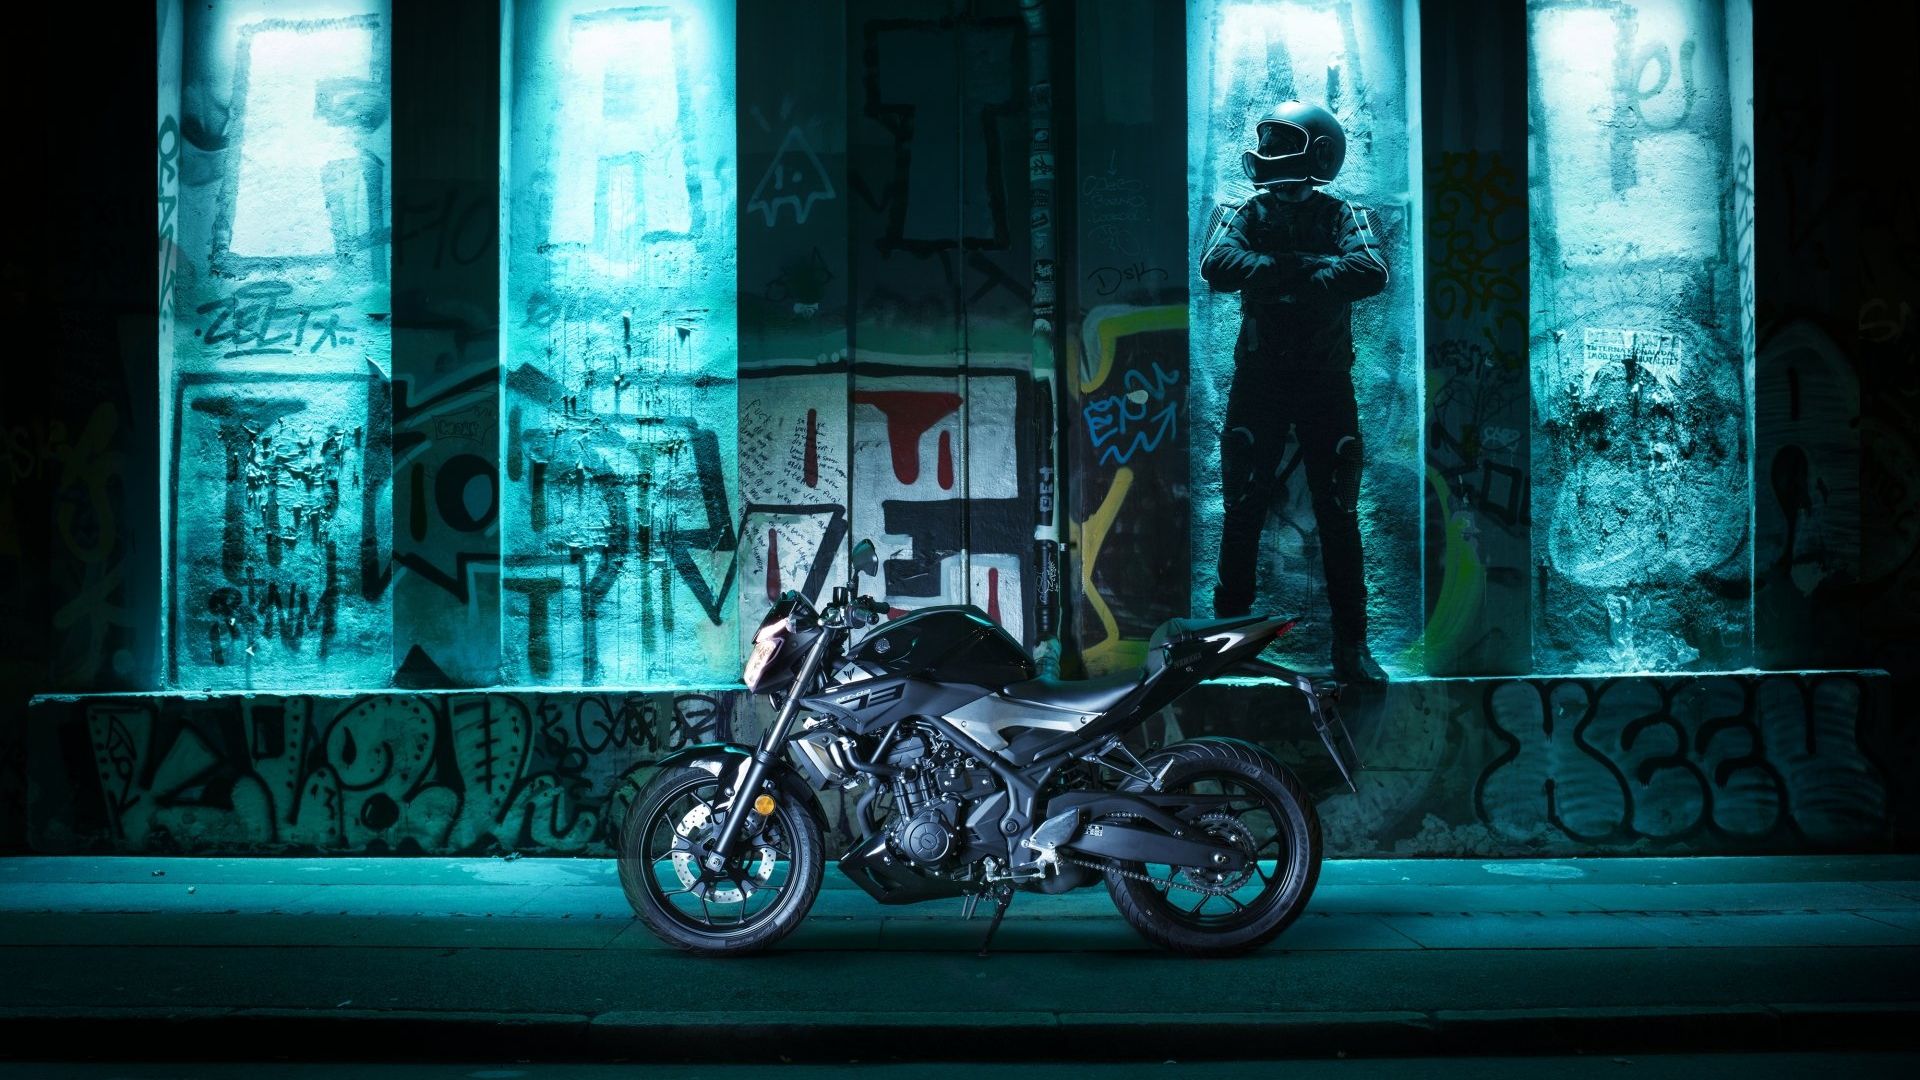 Desktop Wallpaper Yamaha Mt 03 Bike, Night, Graffiti, Hd Image, Picture,  Background, Tu 1jp